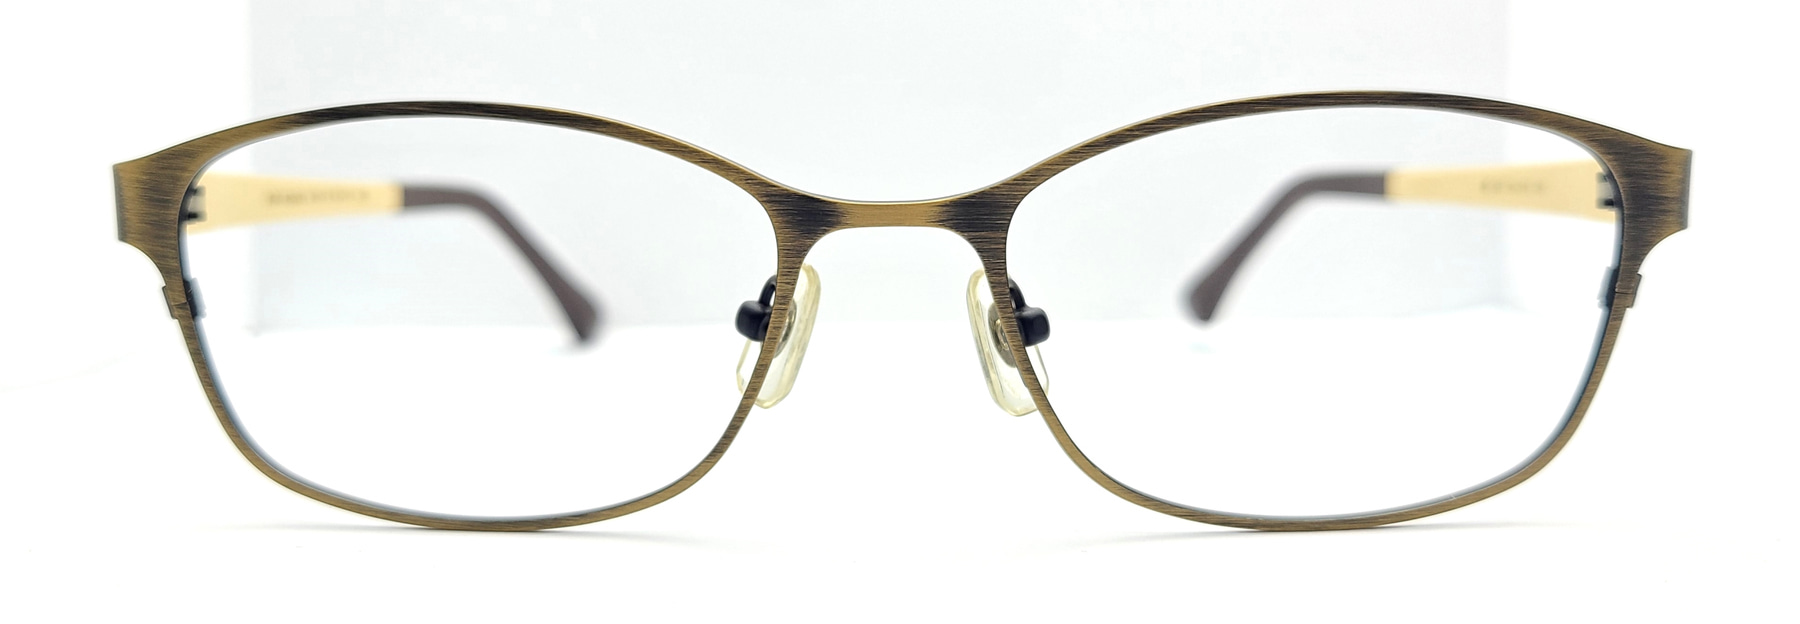 MINIHOUSE M-1307, Korean glasses, sunglasses, eyeglasses, glasses